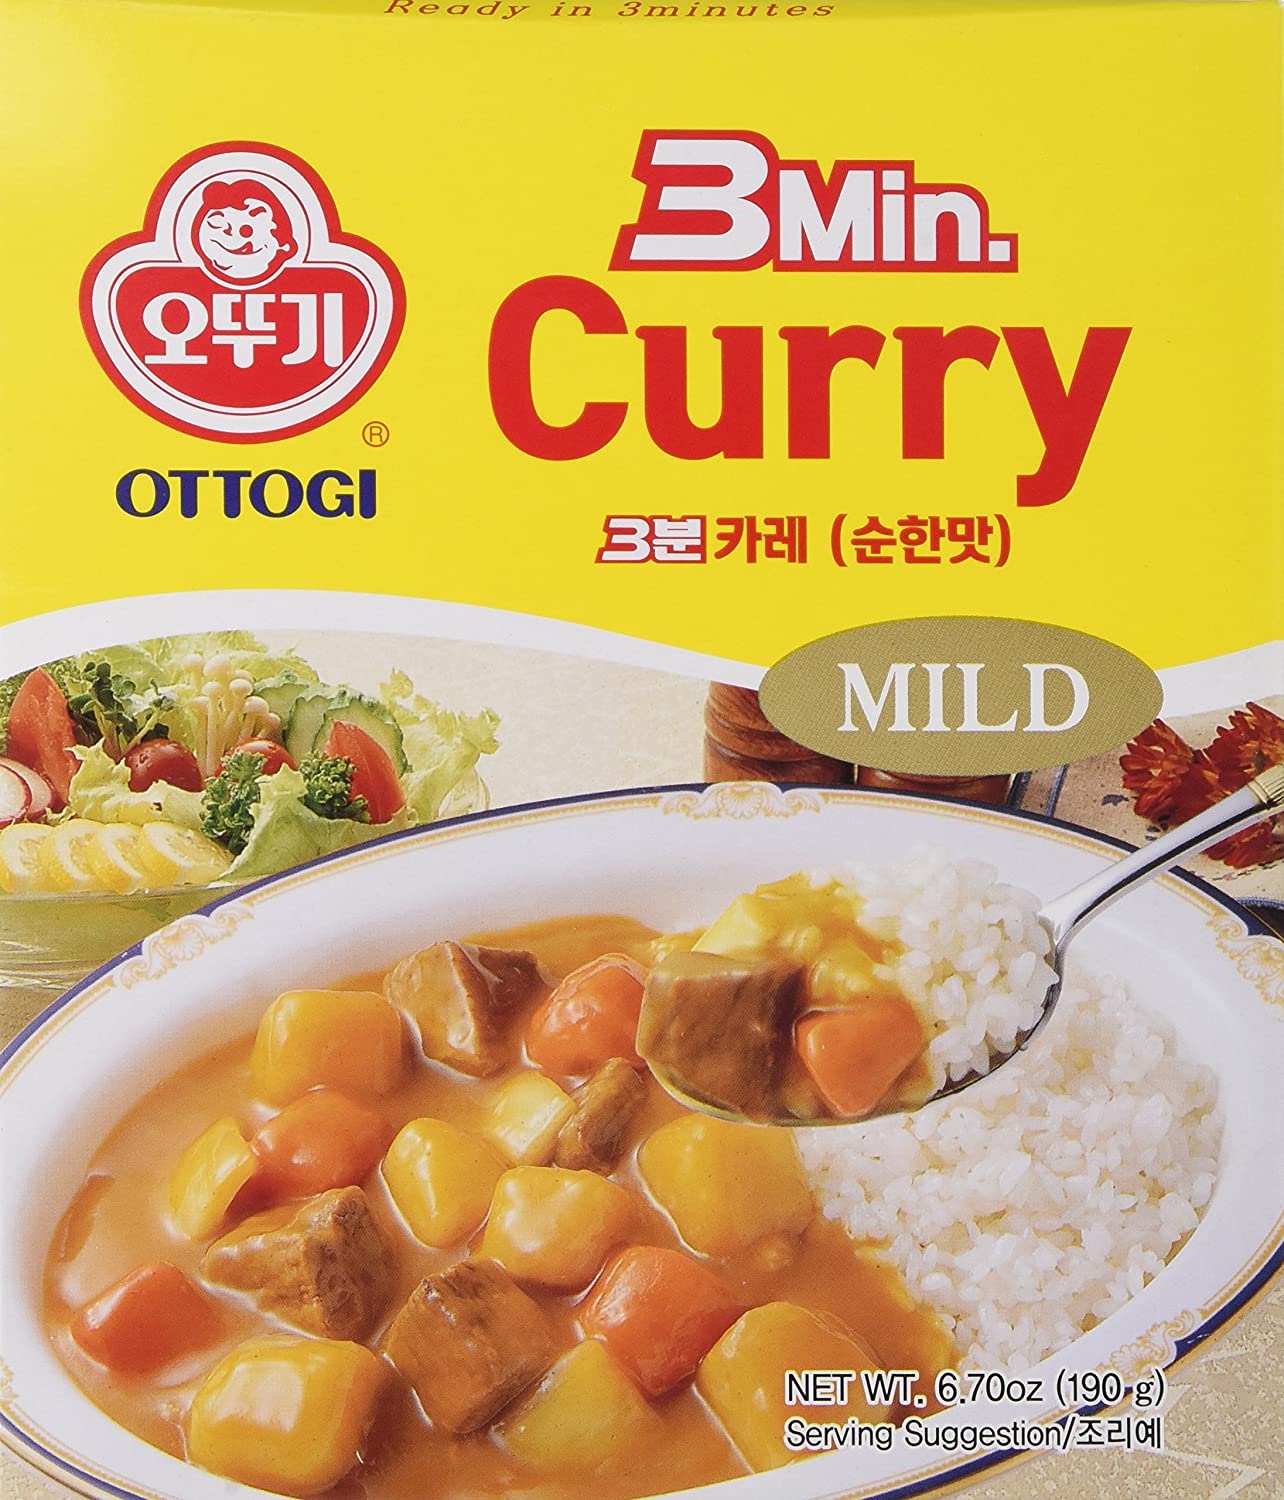 Ottogi 3min. Curry Sauce